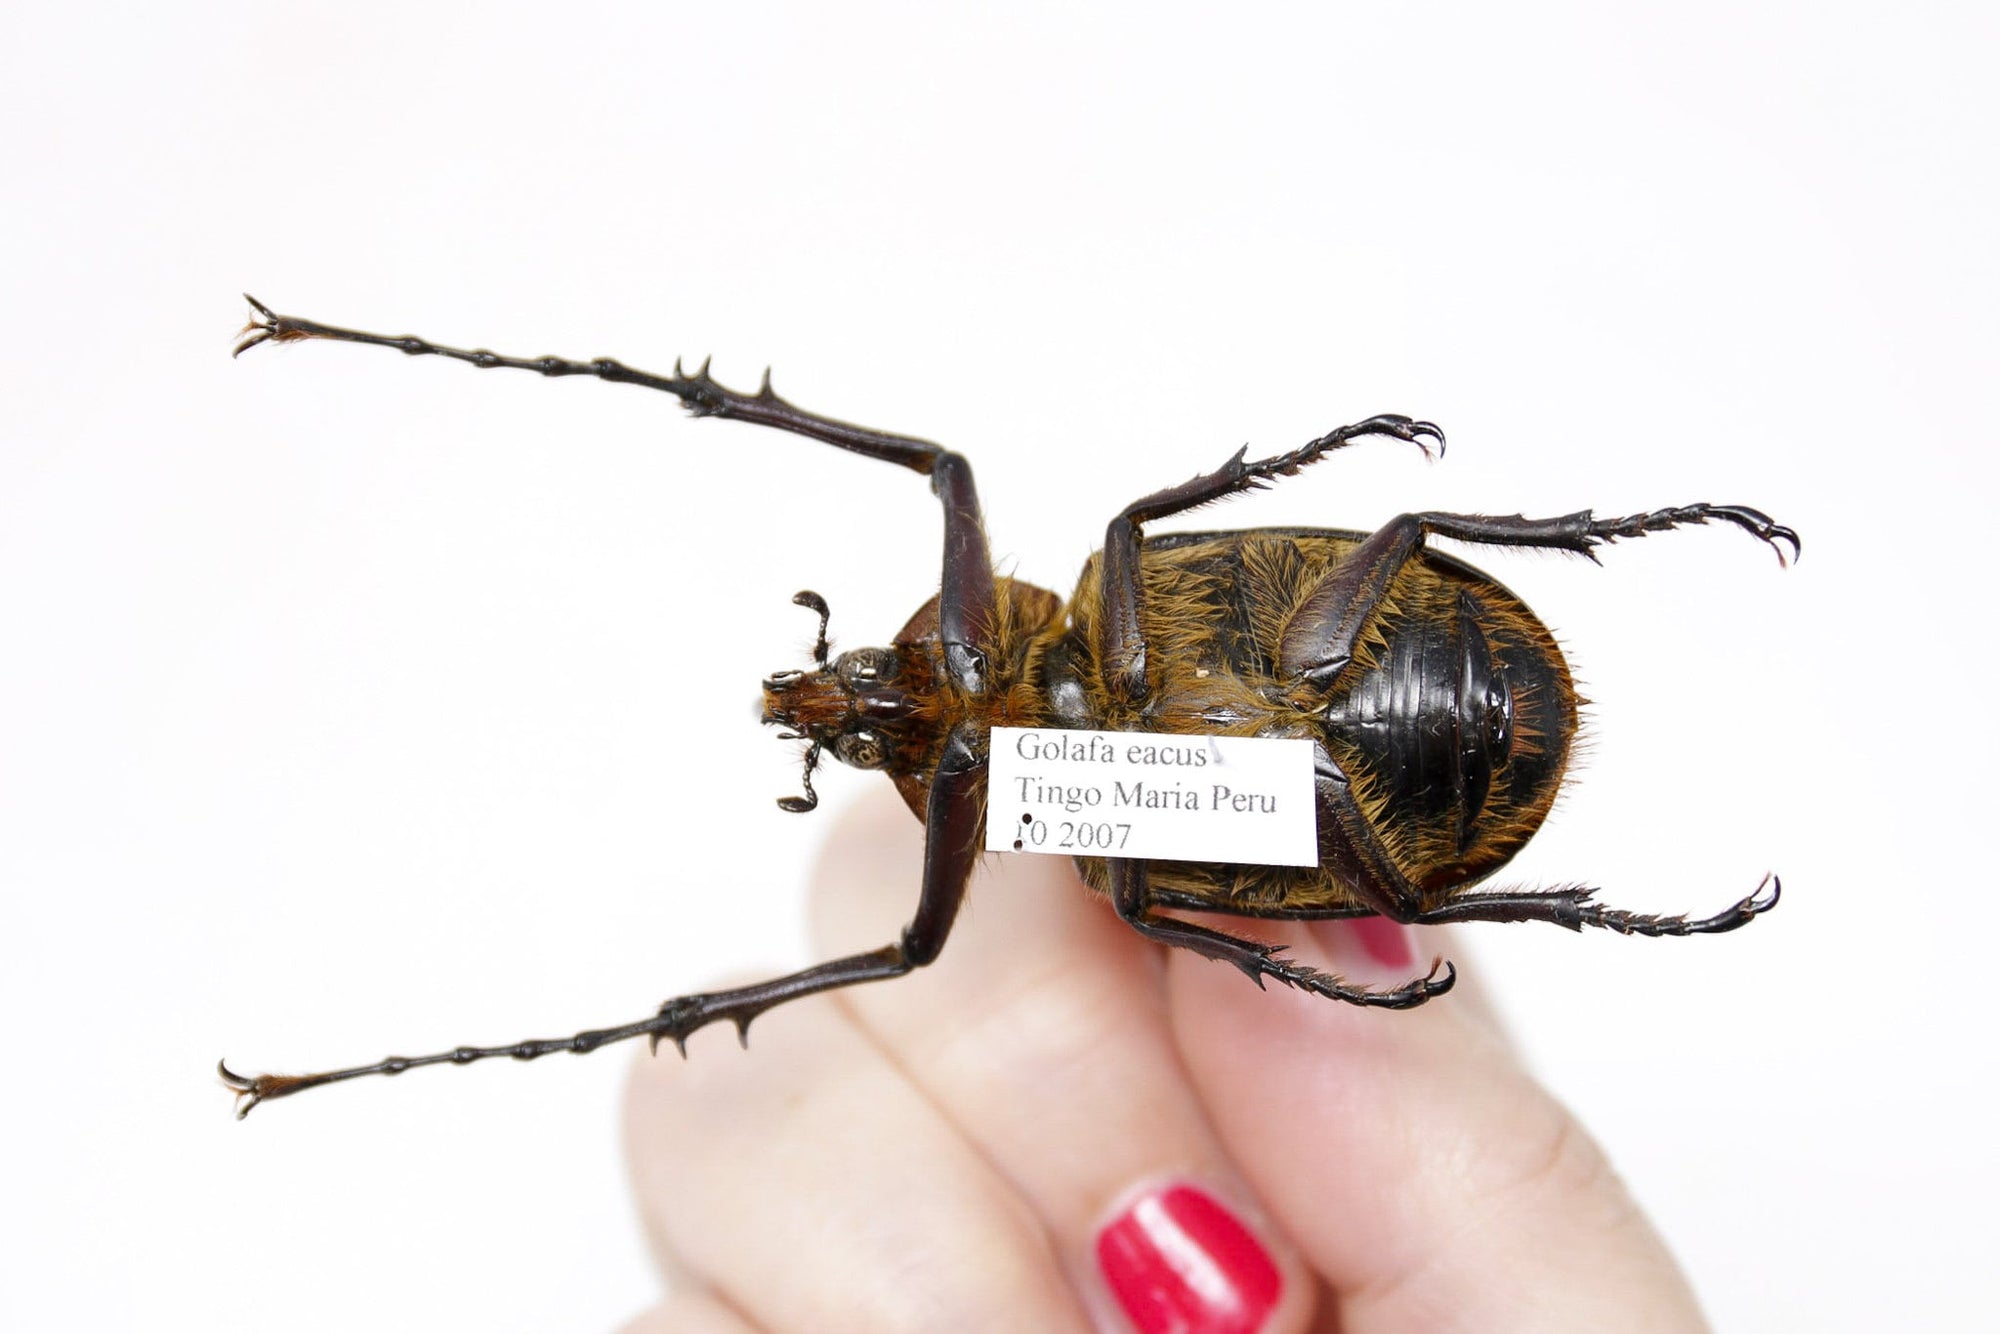 Golofa eacus 48.3mm, A1 Real Beetle Specimen, Entomology Taxidermy #OC07